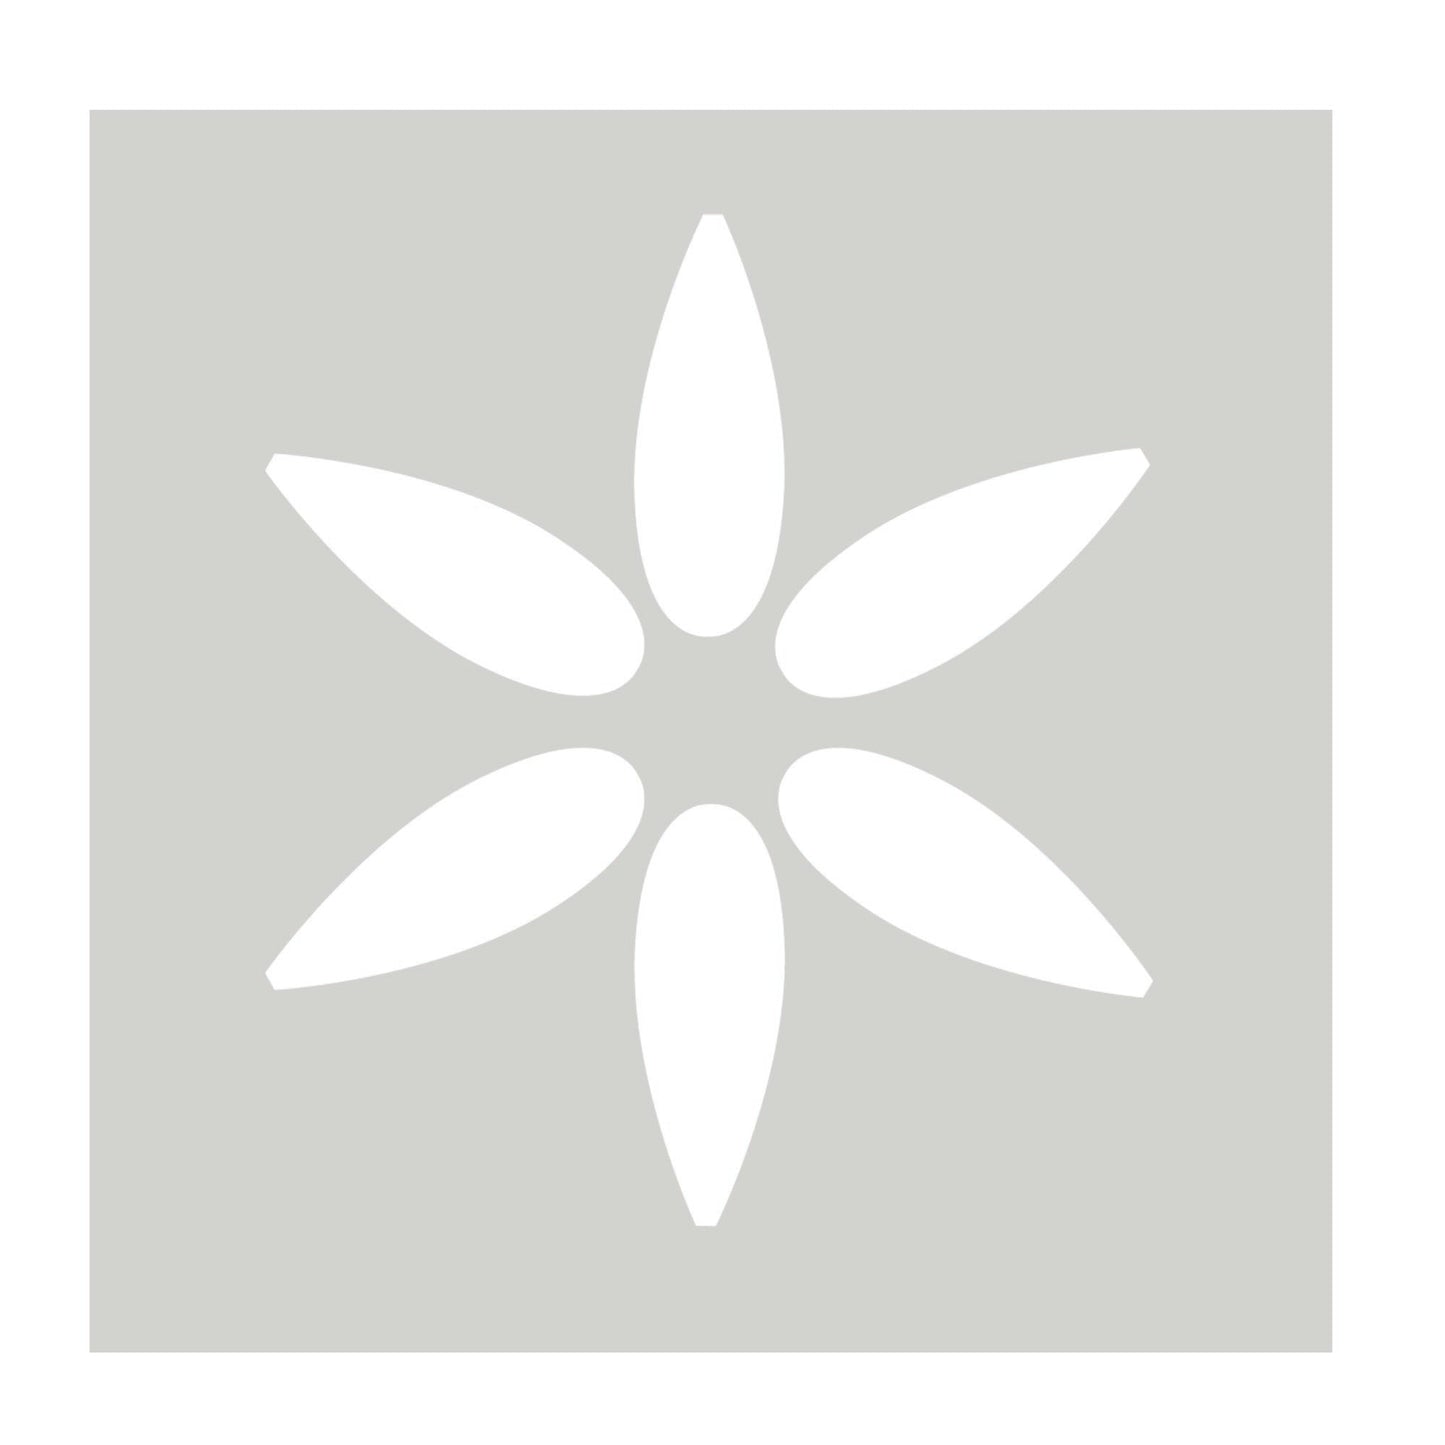 SUNNY Betonplatten Schablone - Moderne Blumenschablone für Terrassen-Platten - Fliesen Schablone